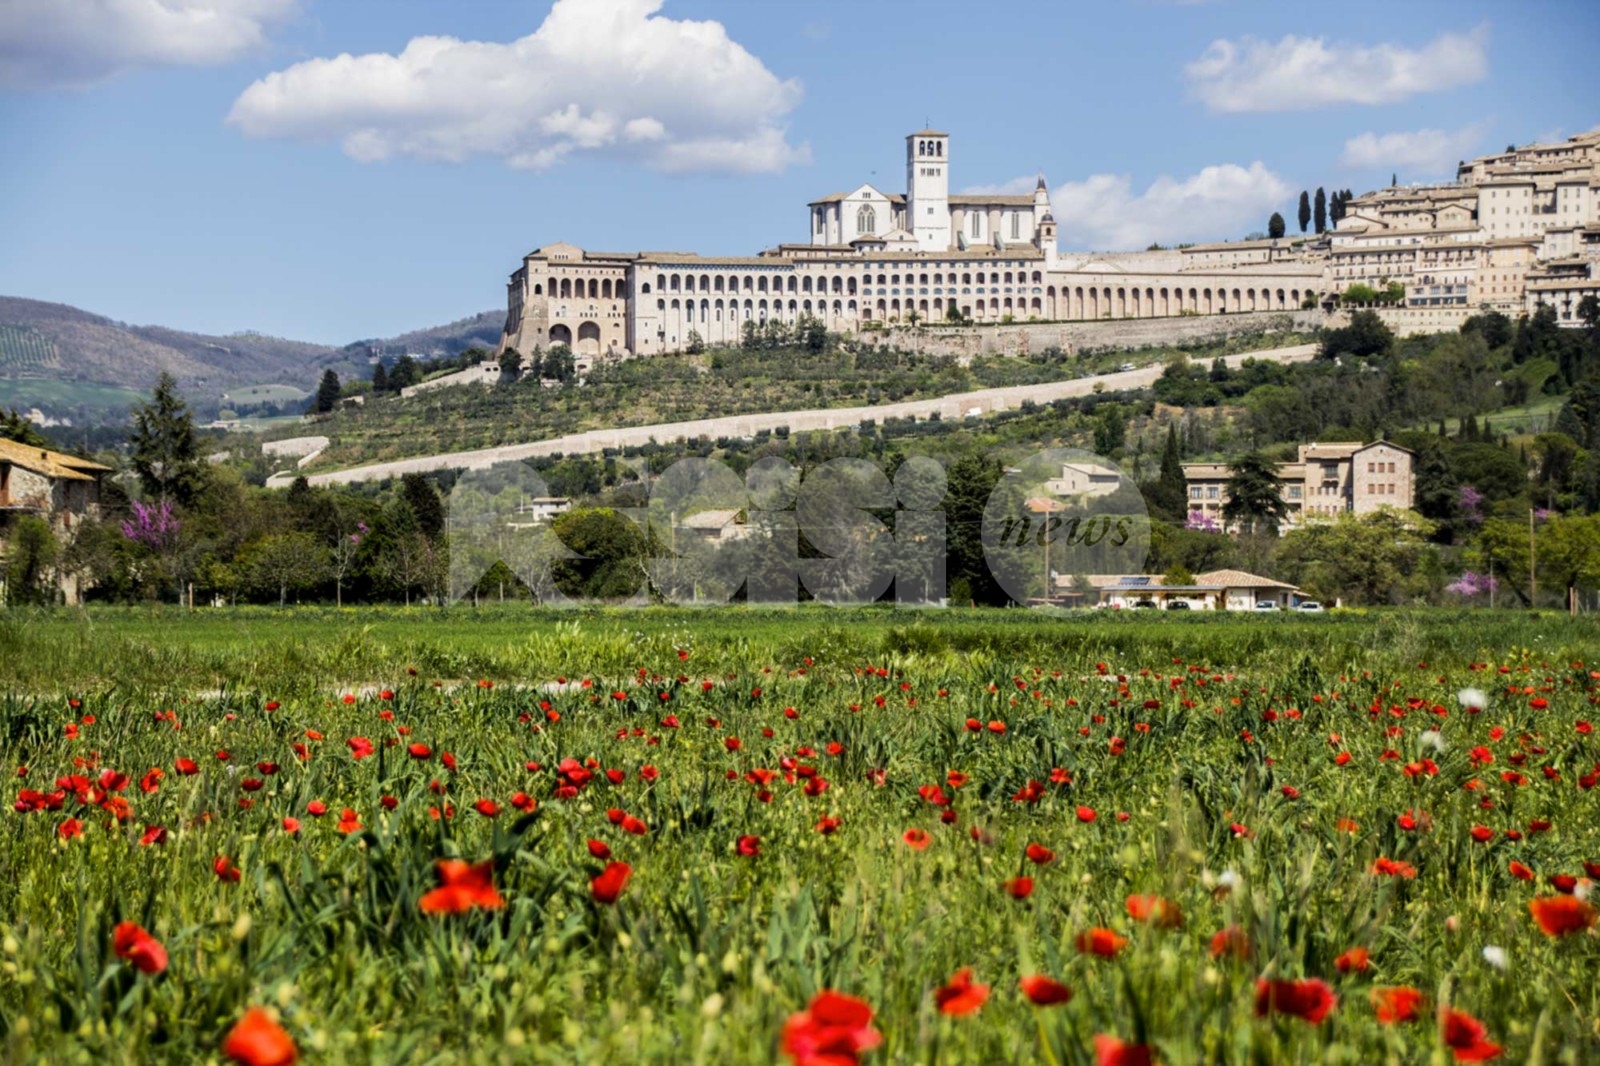 Economy of Francesco, anche i teenager protagonisti ad Assisi